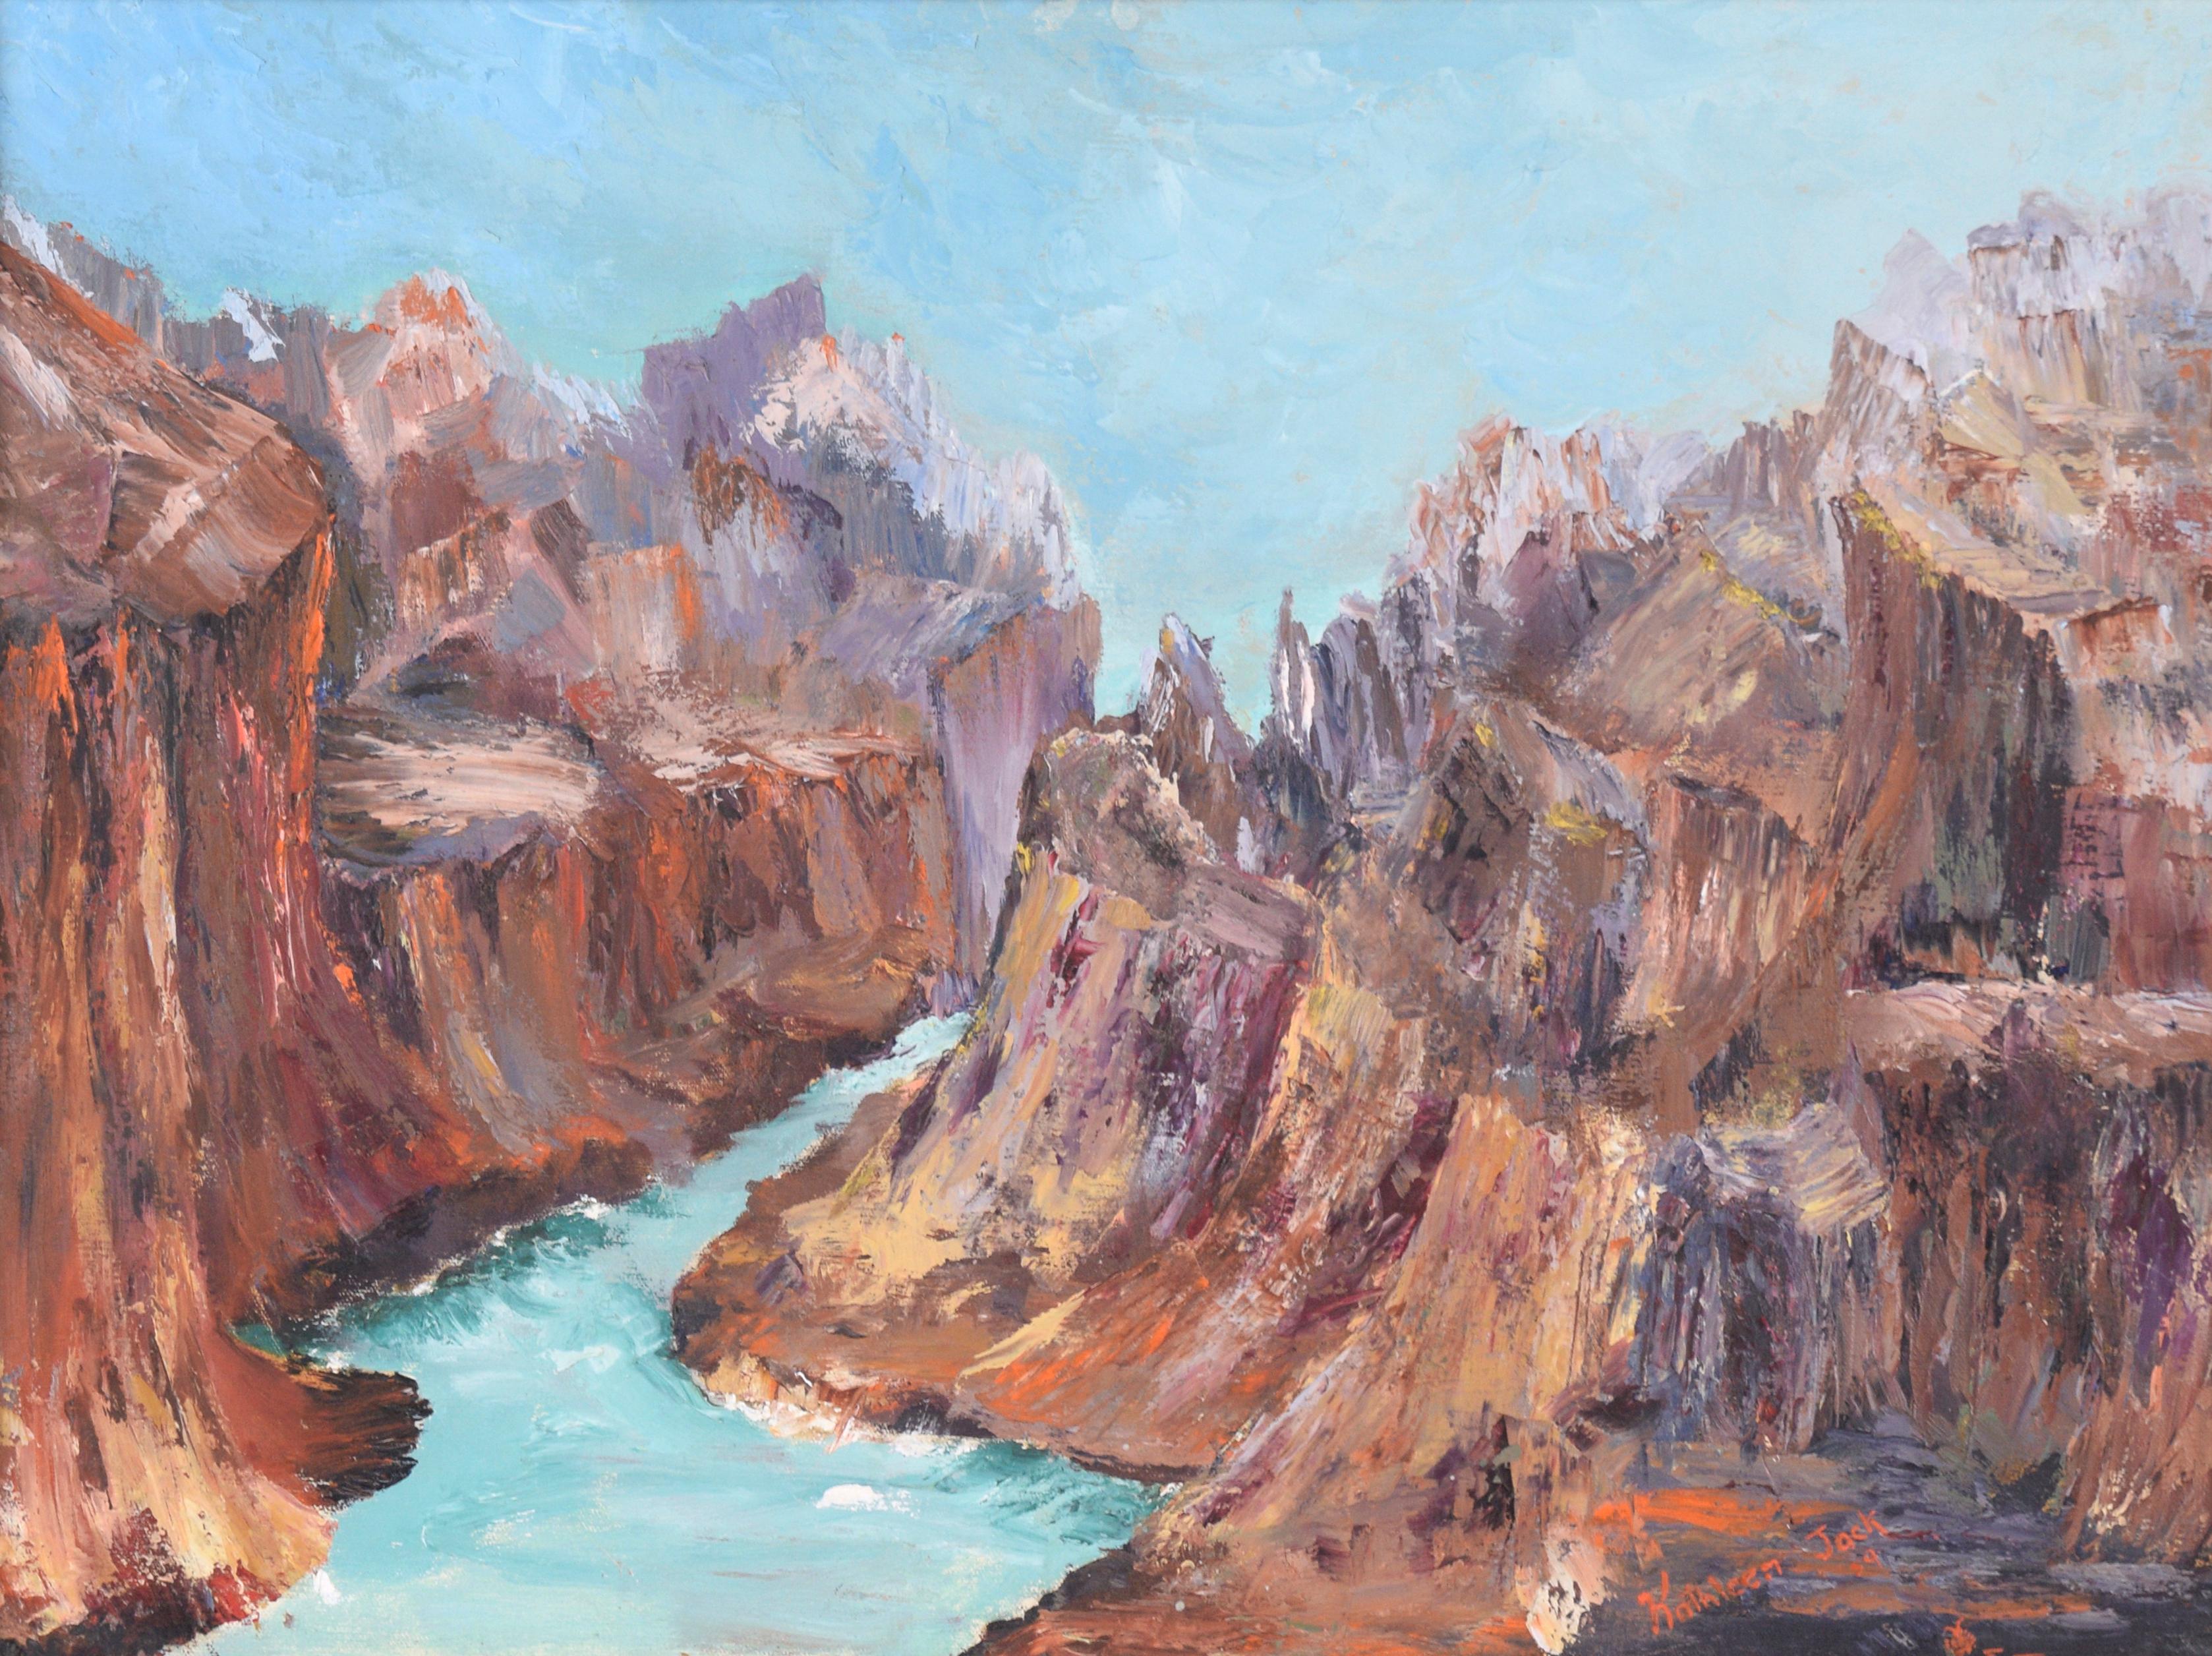 River Running Through the Canyon - Landschaft – Painting von Kathleen Jack